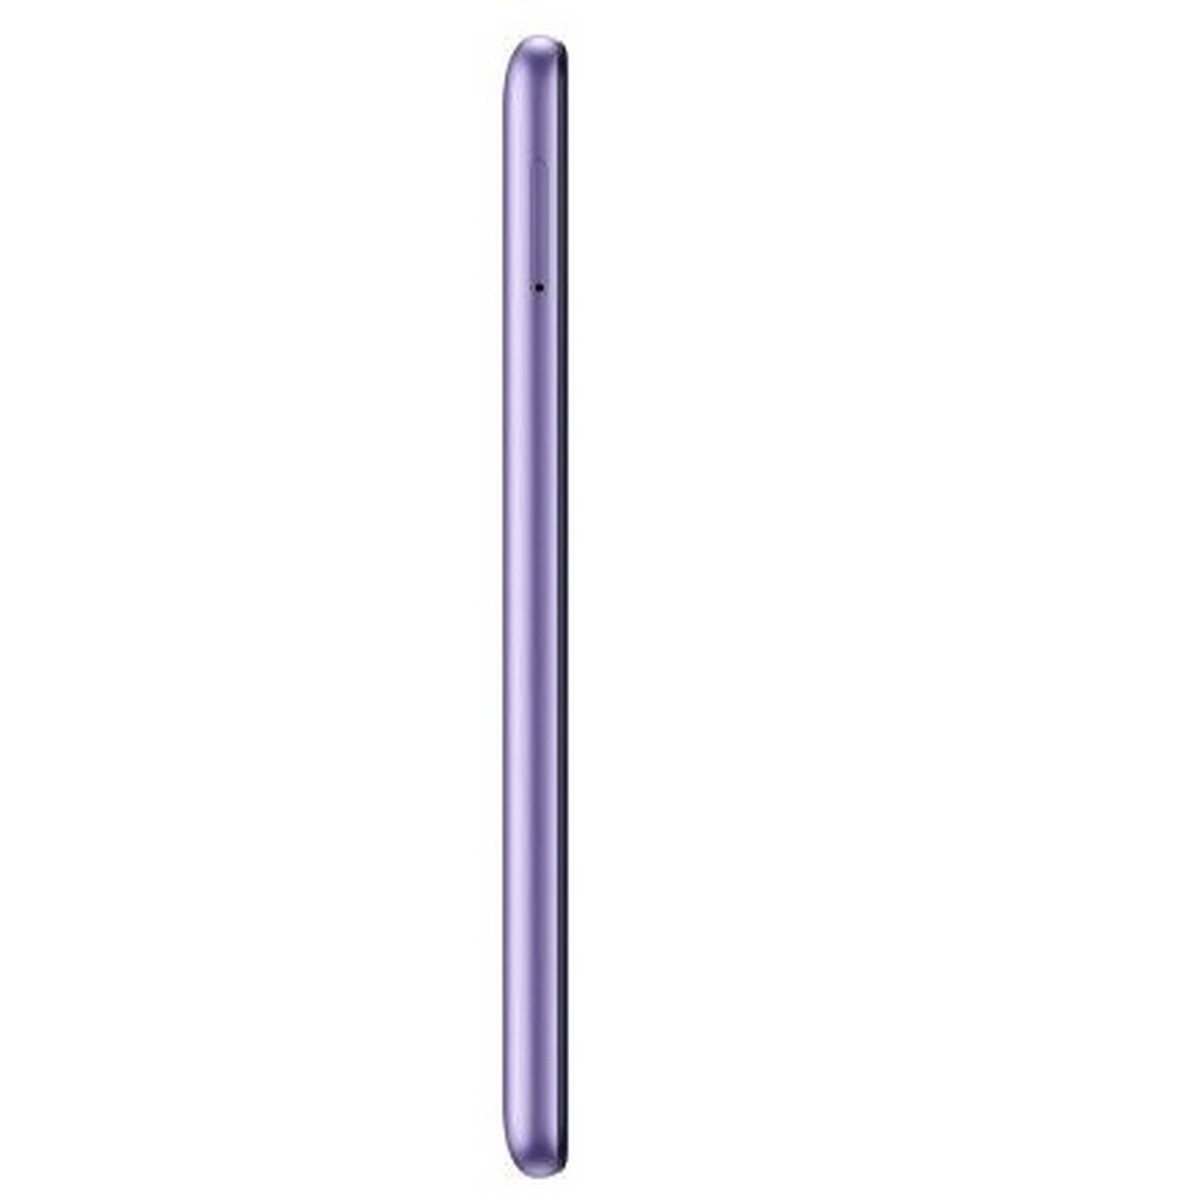 Samsung M11 3GB/32GB Violet + Free Feature Phone